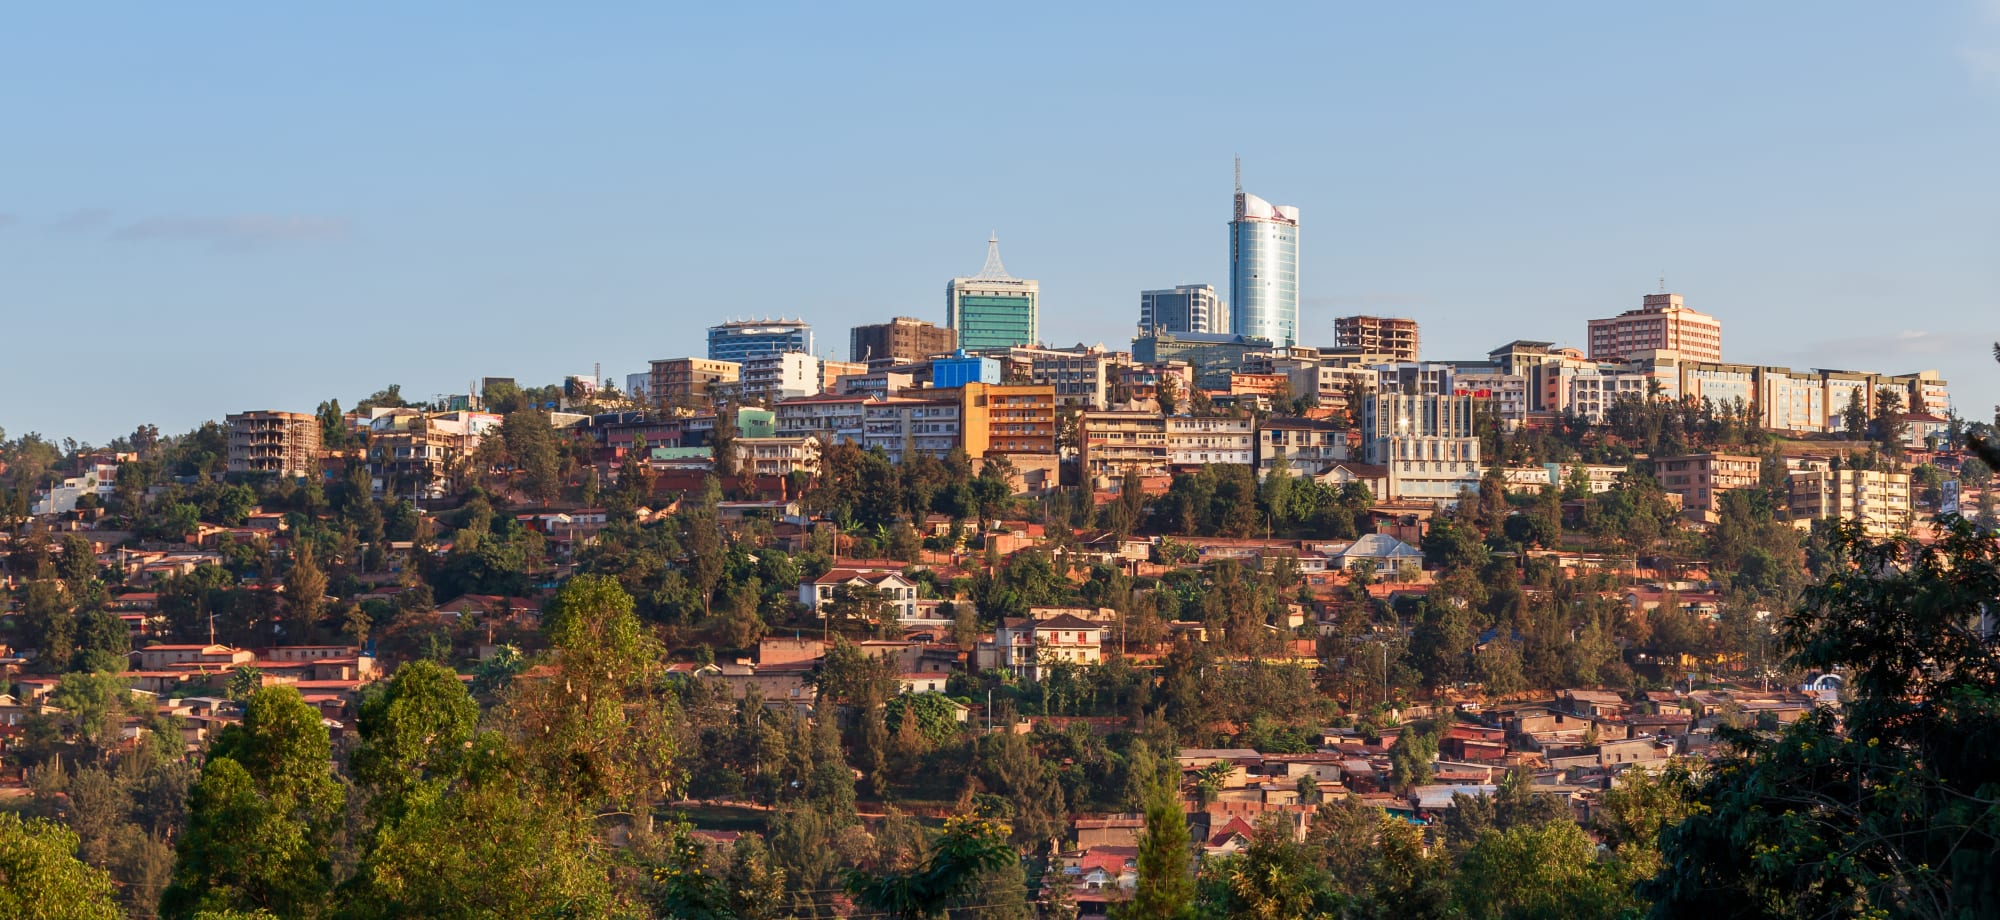 kigali_city_rwanda-1